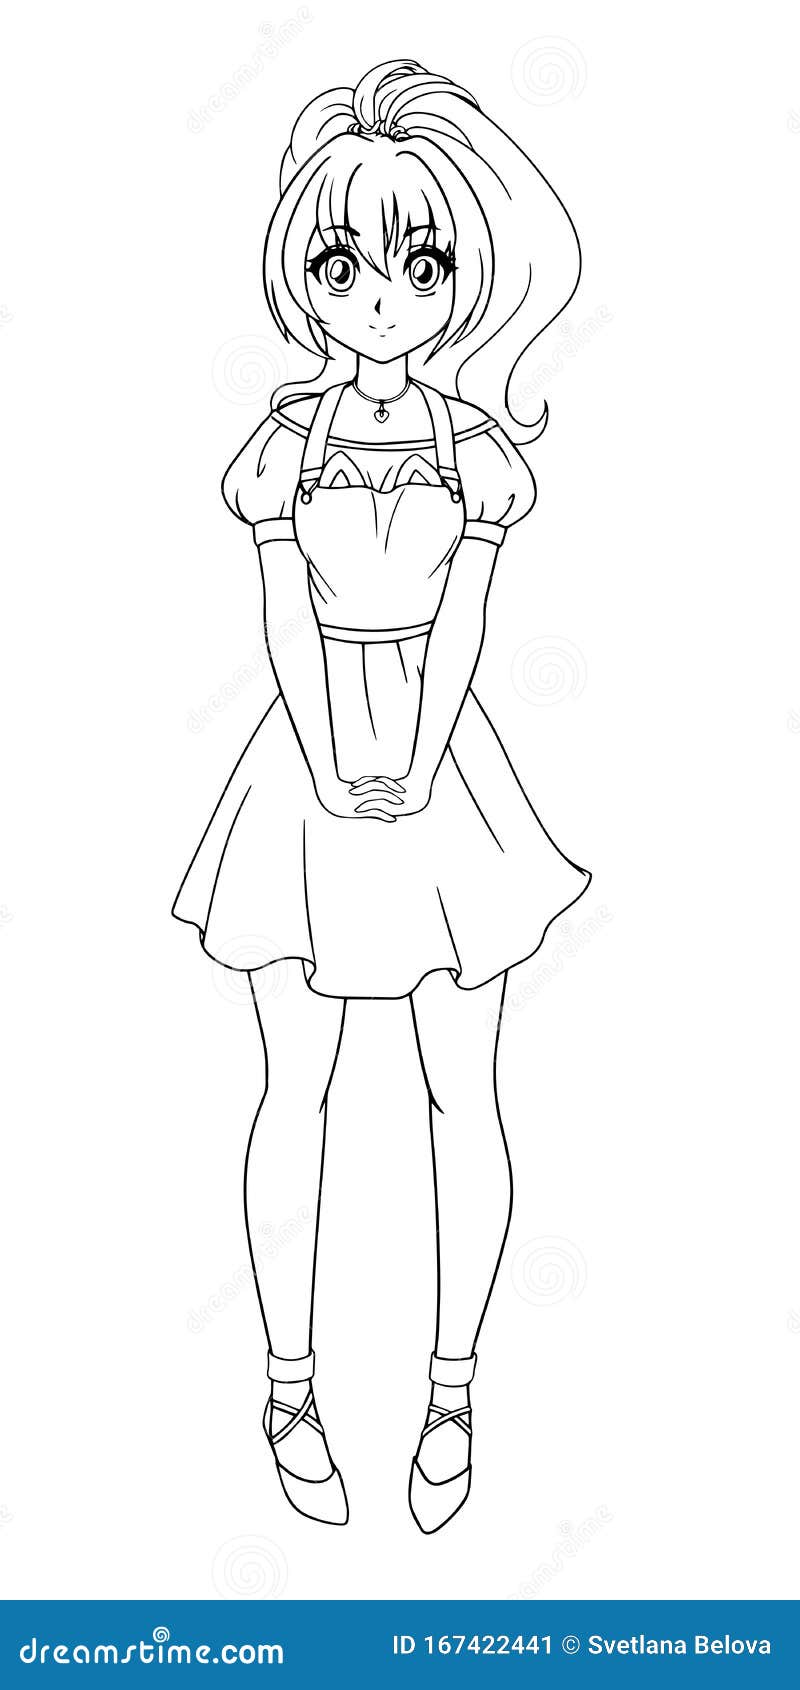 Coloring page princess kawaii style cute anime Vector Image